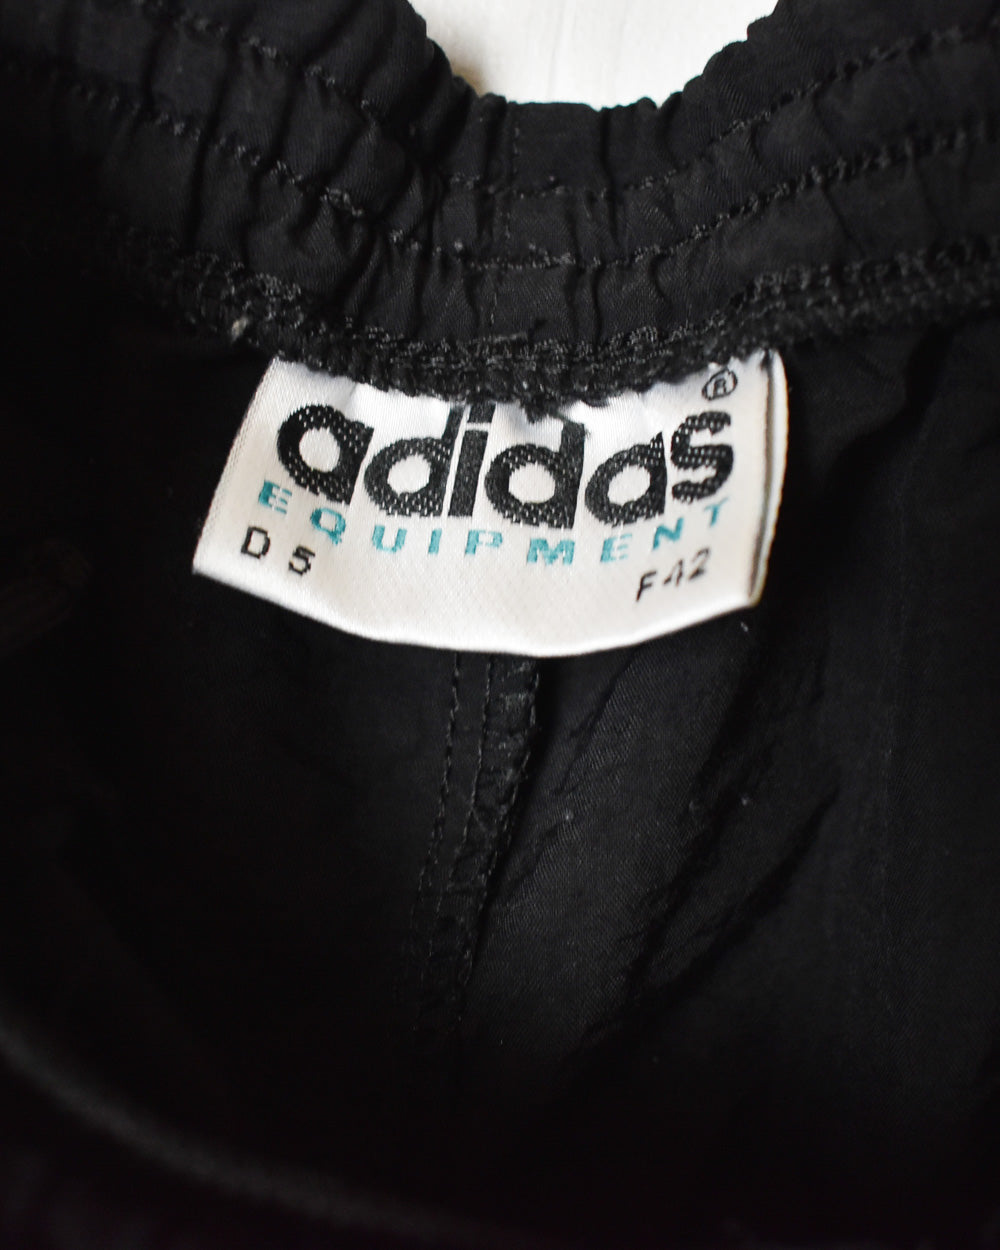 Black Adidas Equipment Shorts - Small